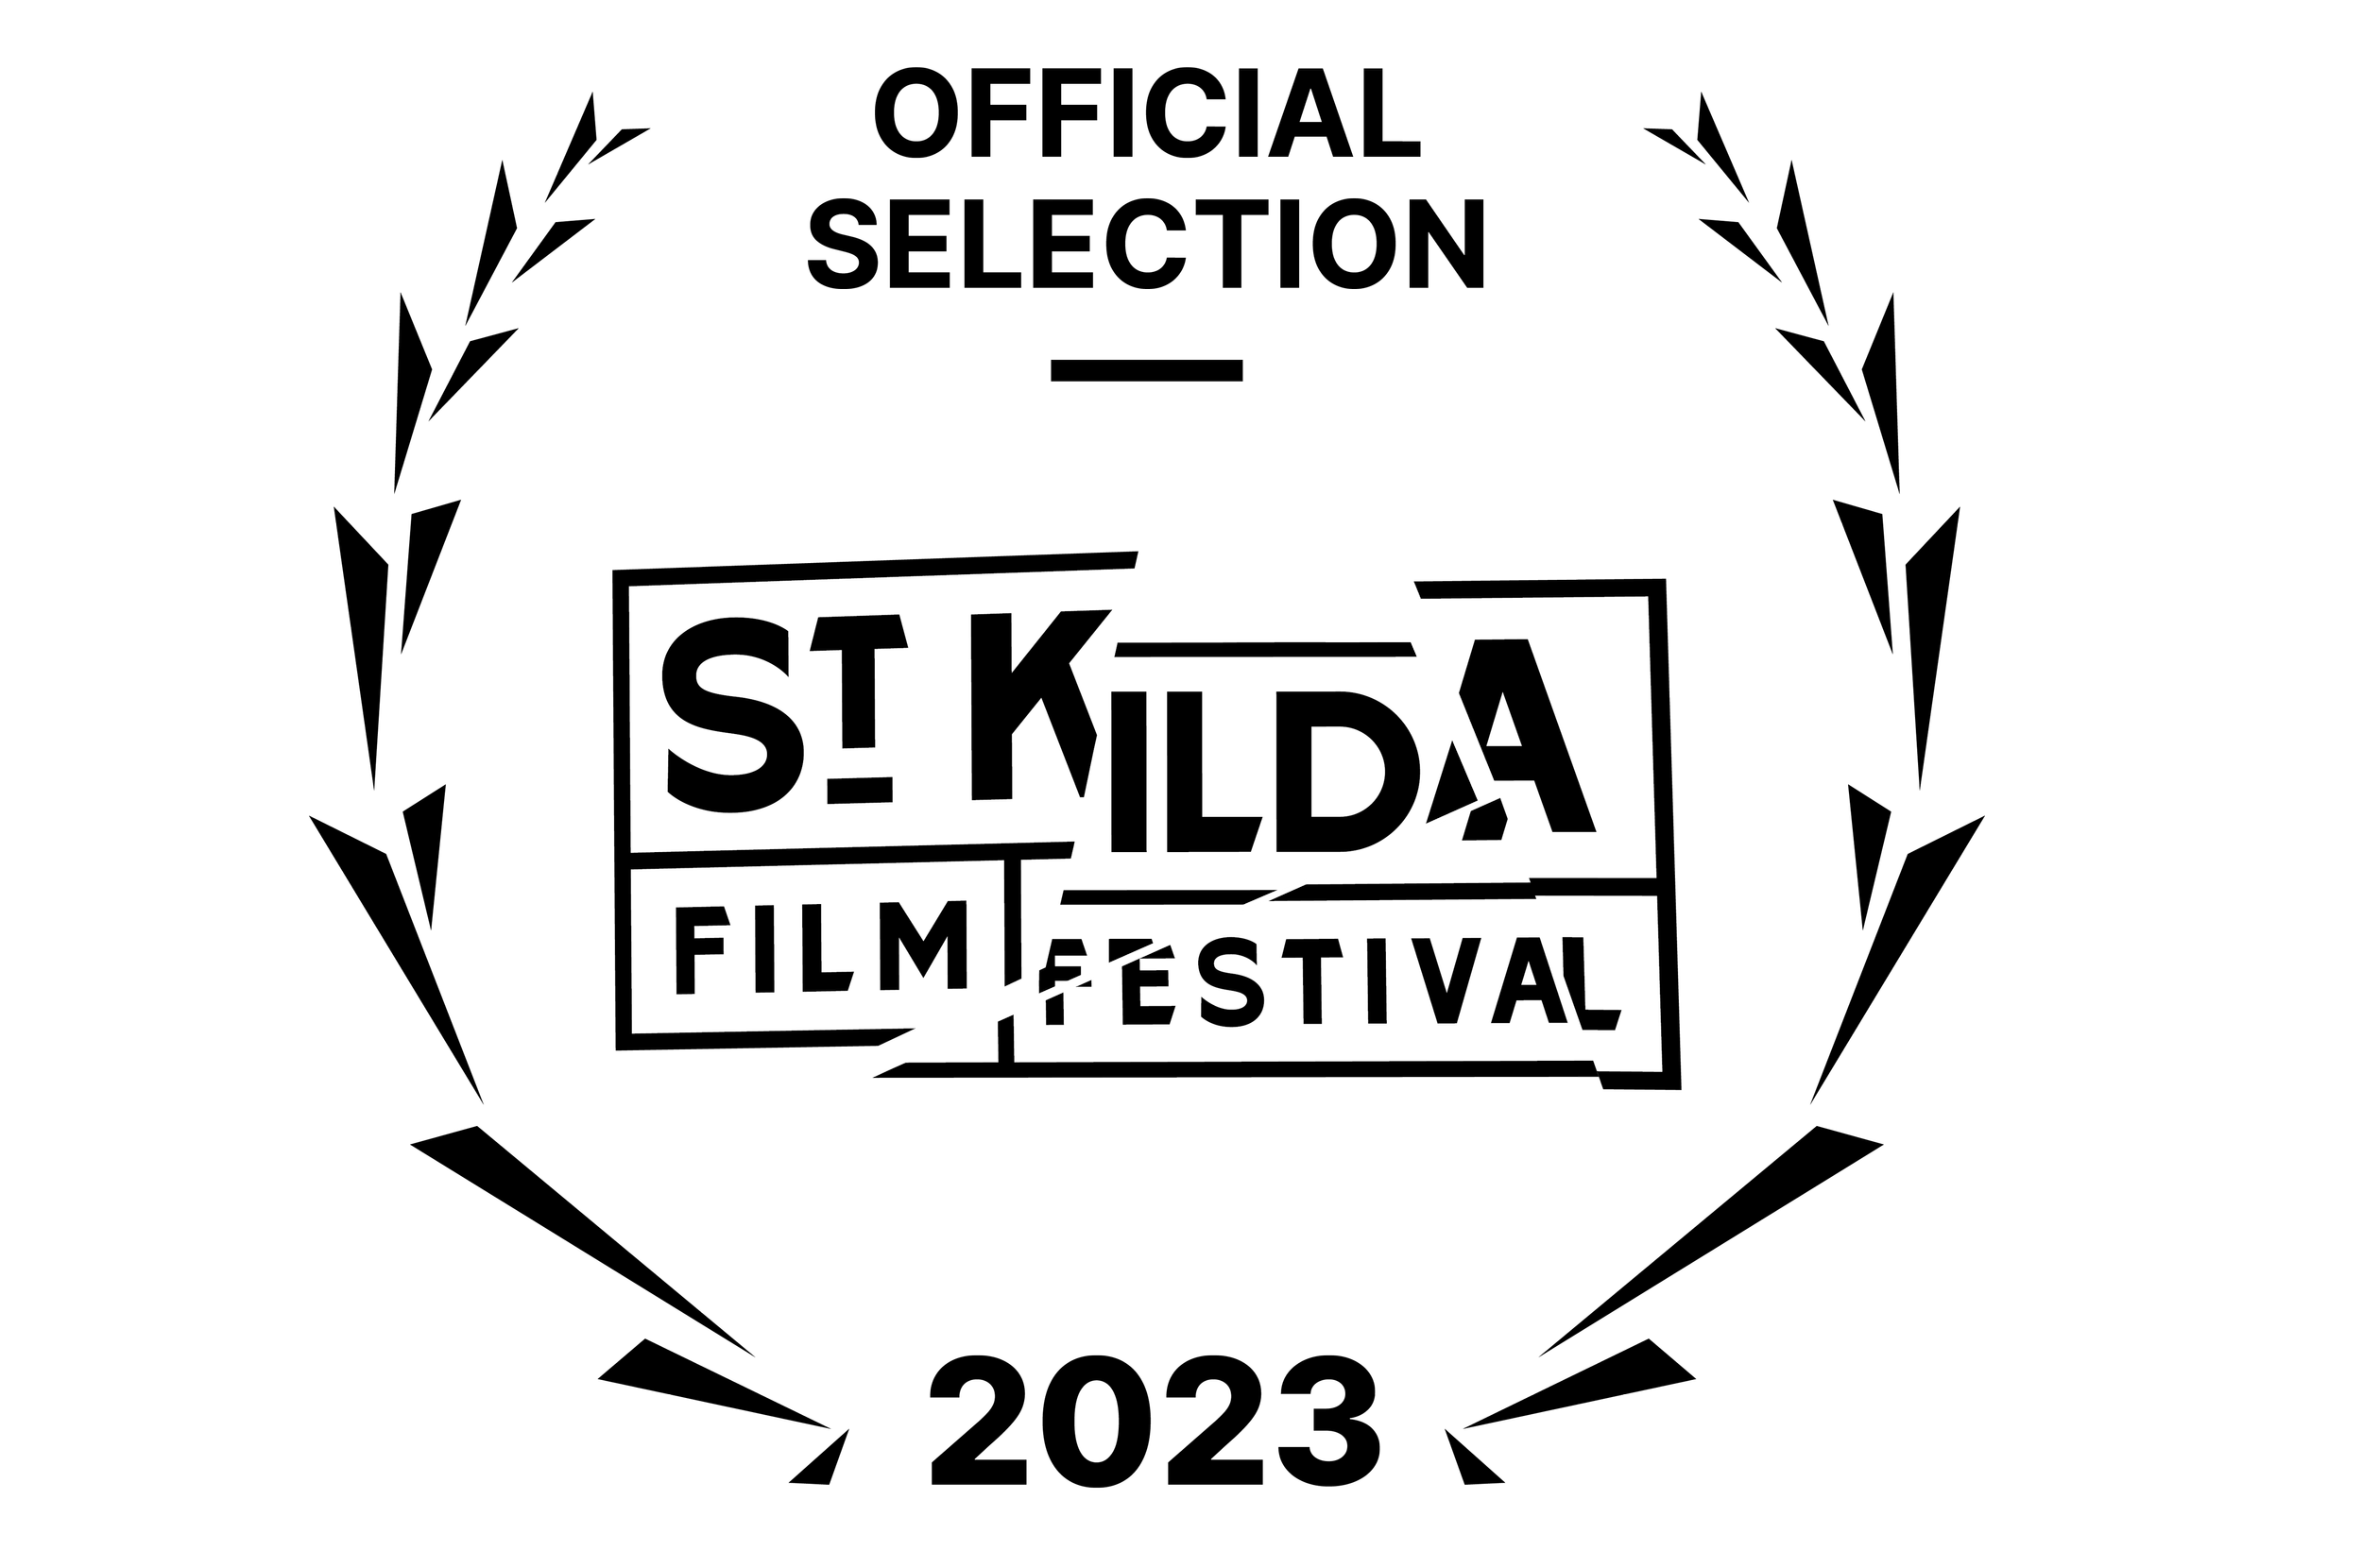 St Kilda Film Festival Resize.png